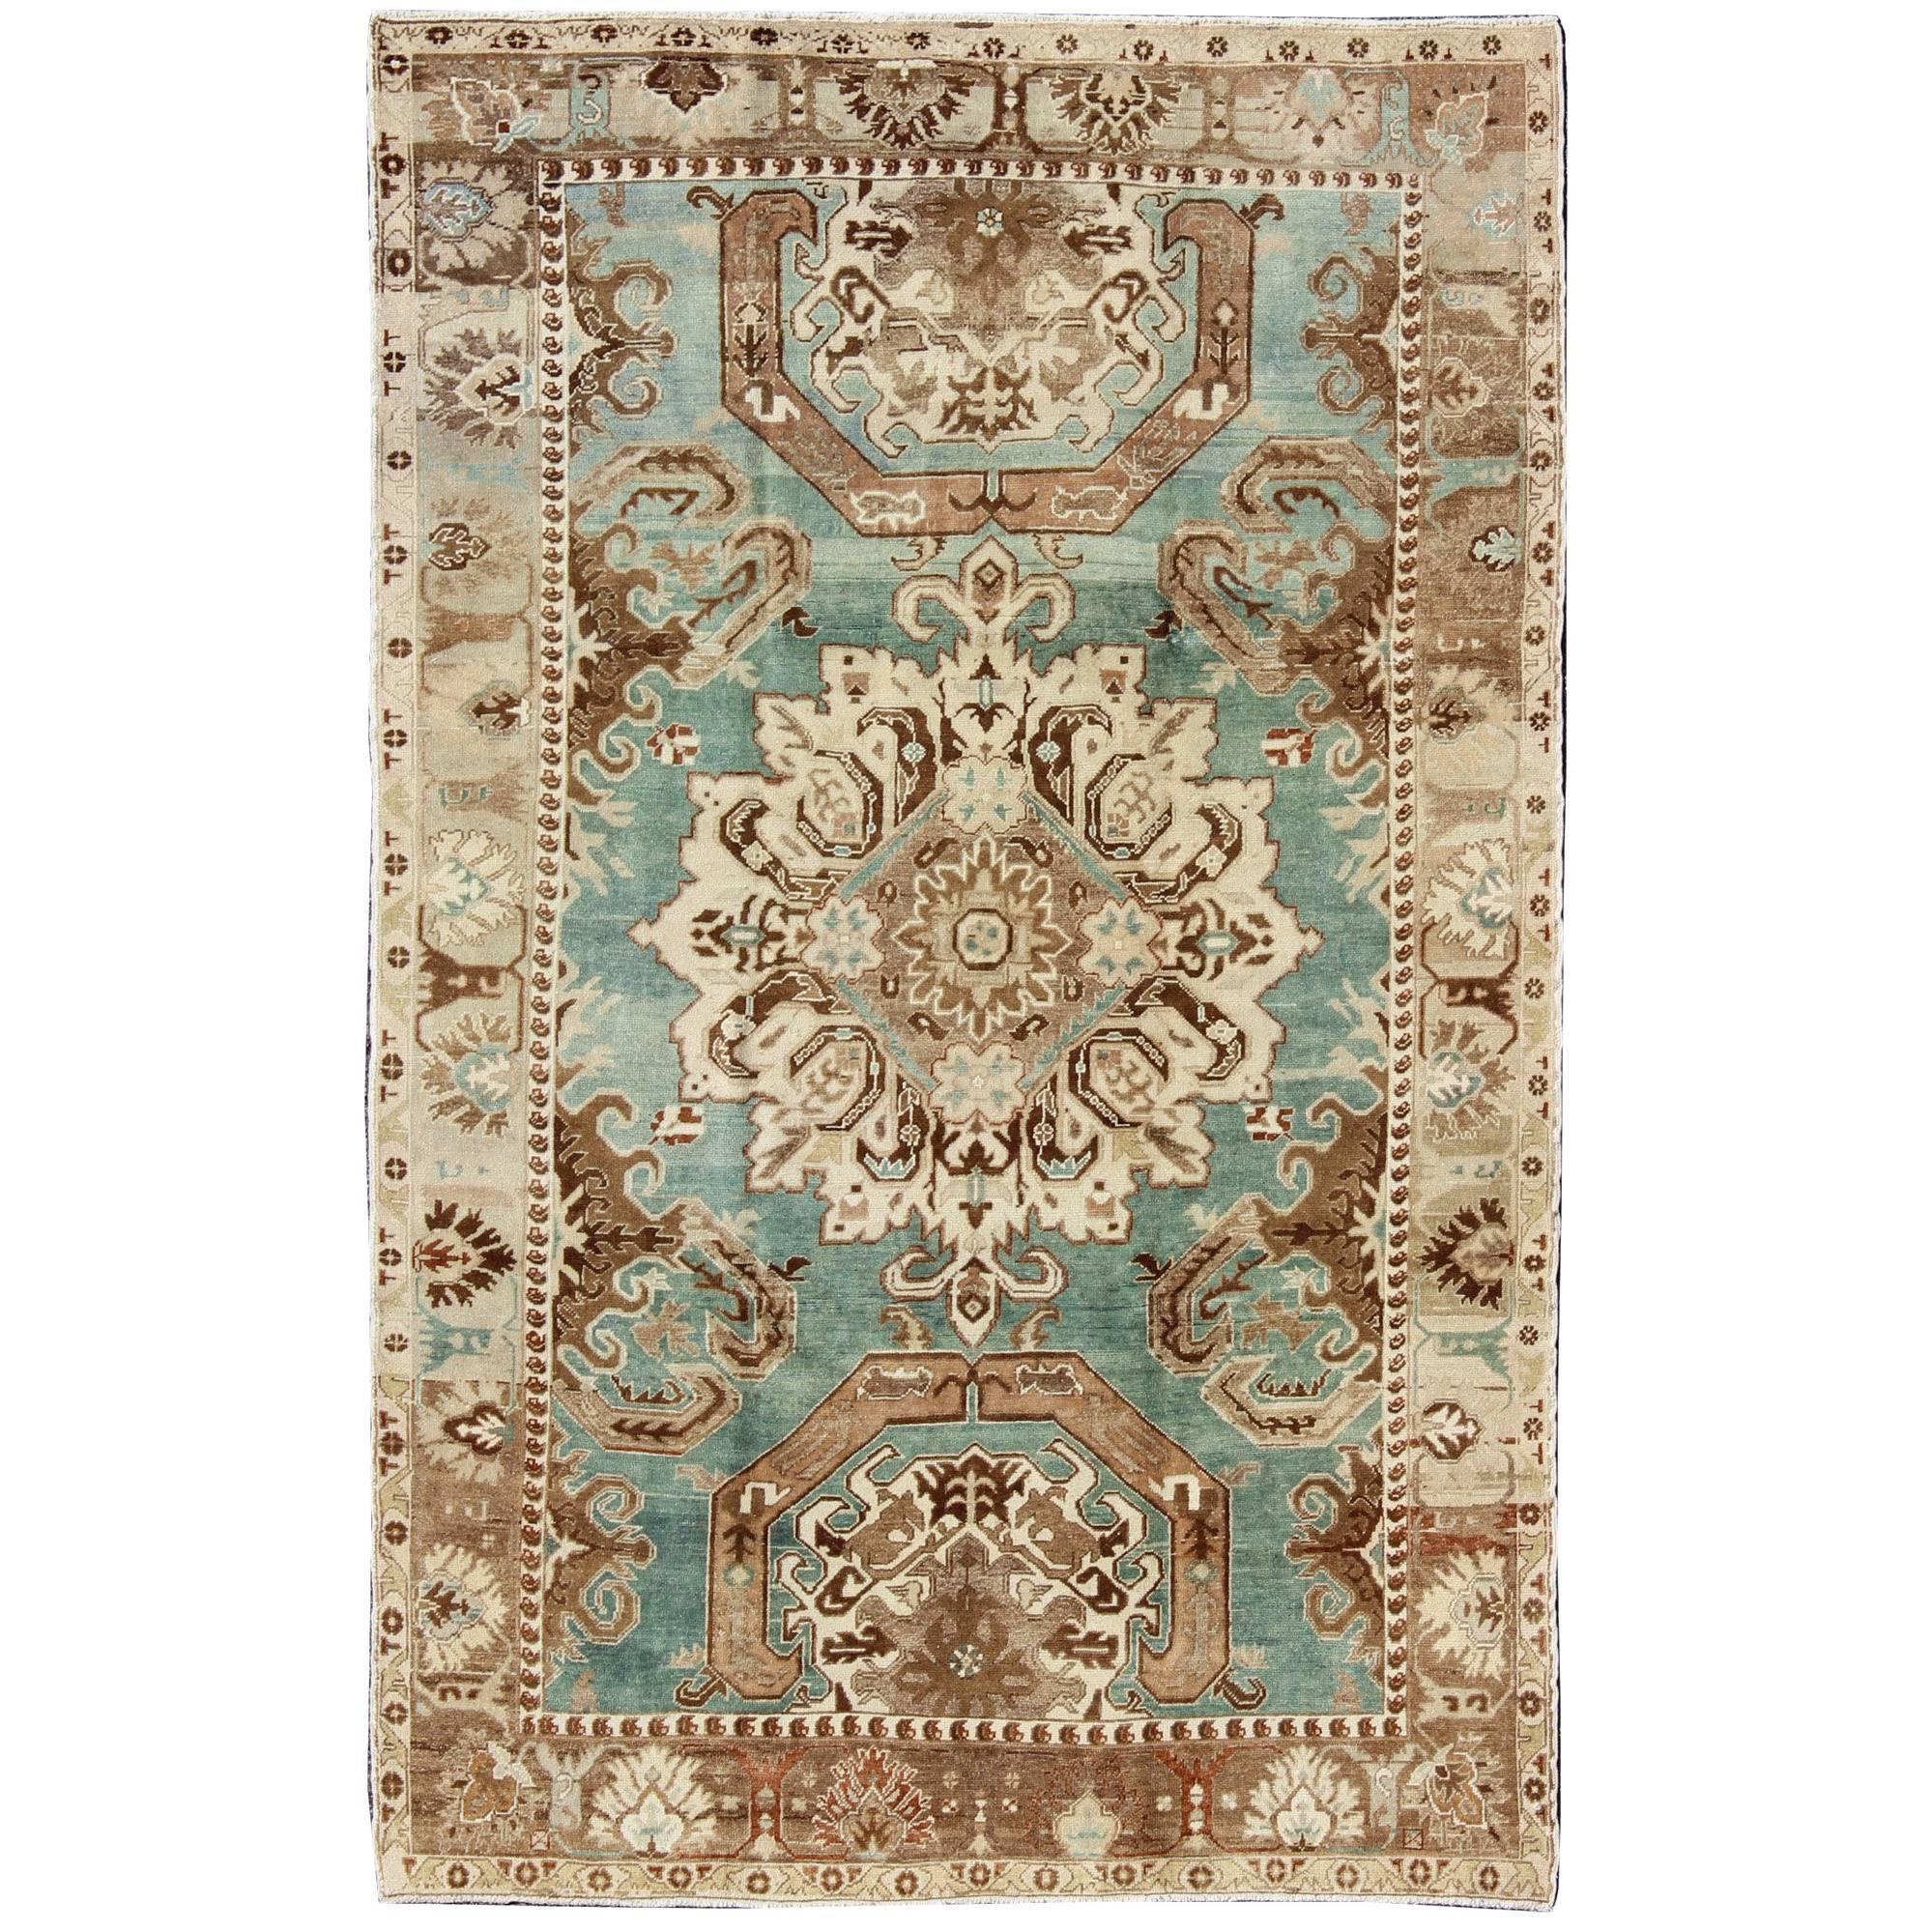 Unique Vintage Turkish Carpet with Geometric Design Inspired by Caucasian Design For Sale